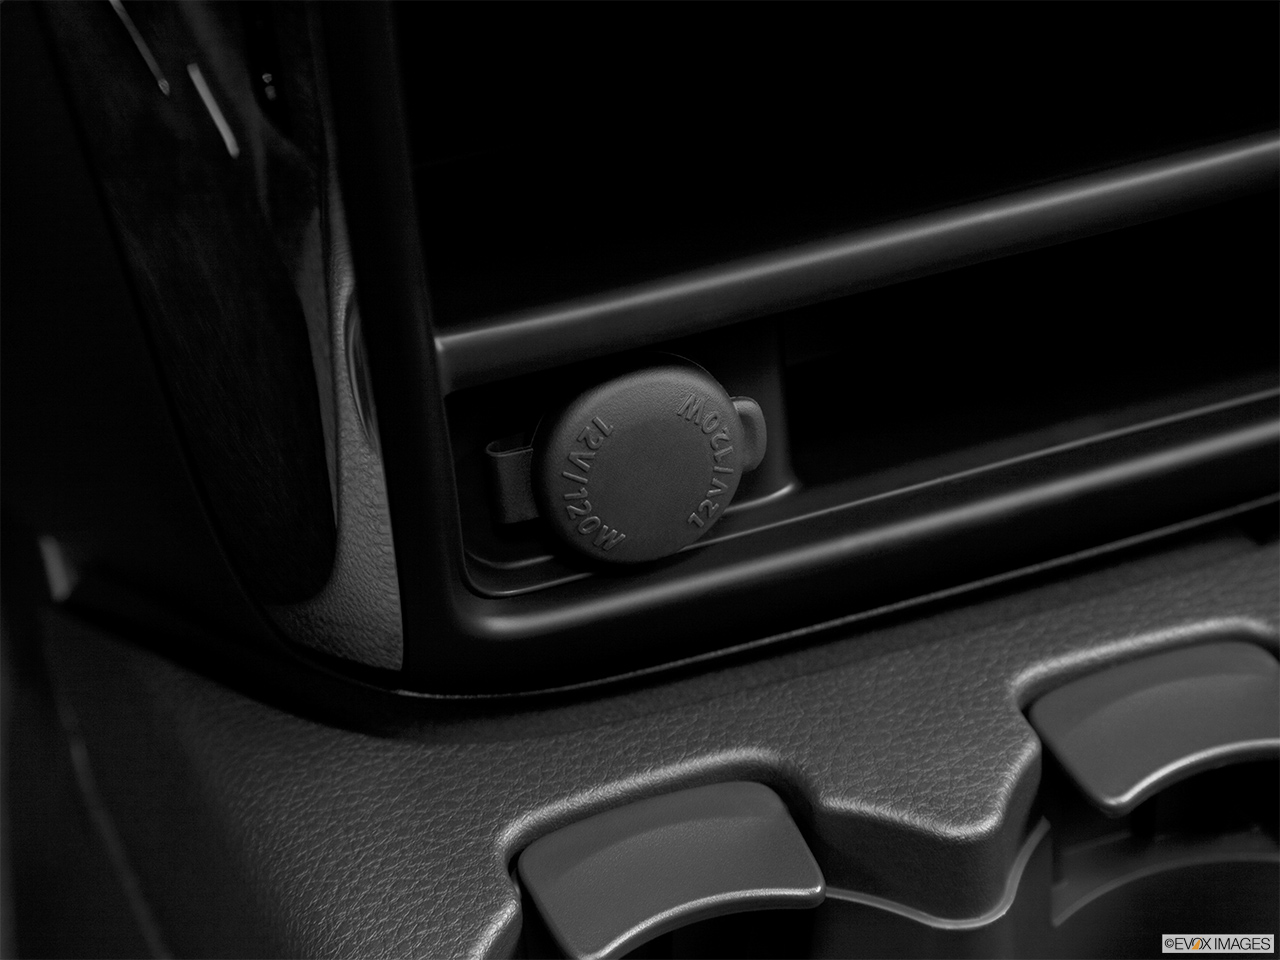 2013 Suzuki SX4 AWD Crossover Premium AT AWD Main power point. 